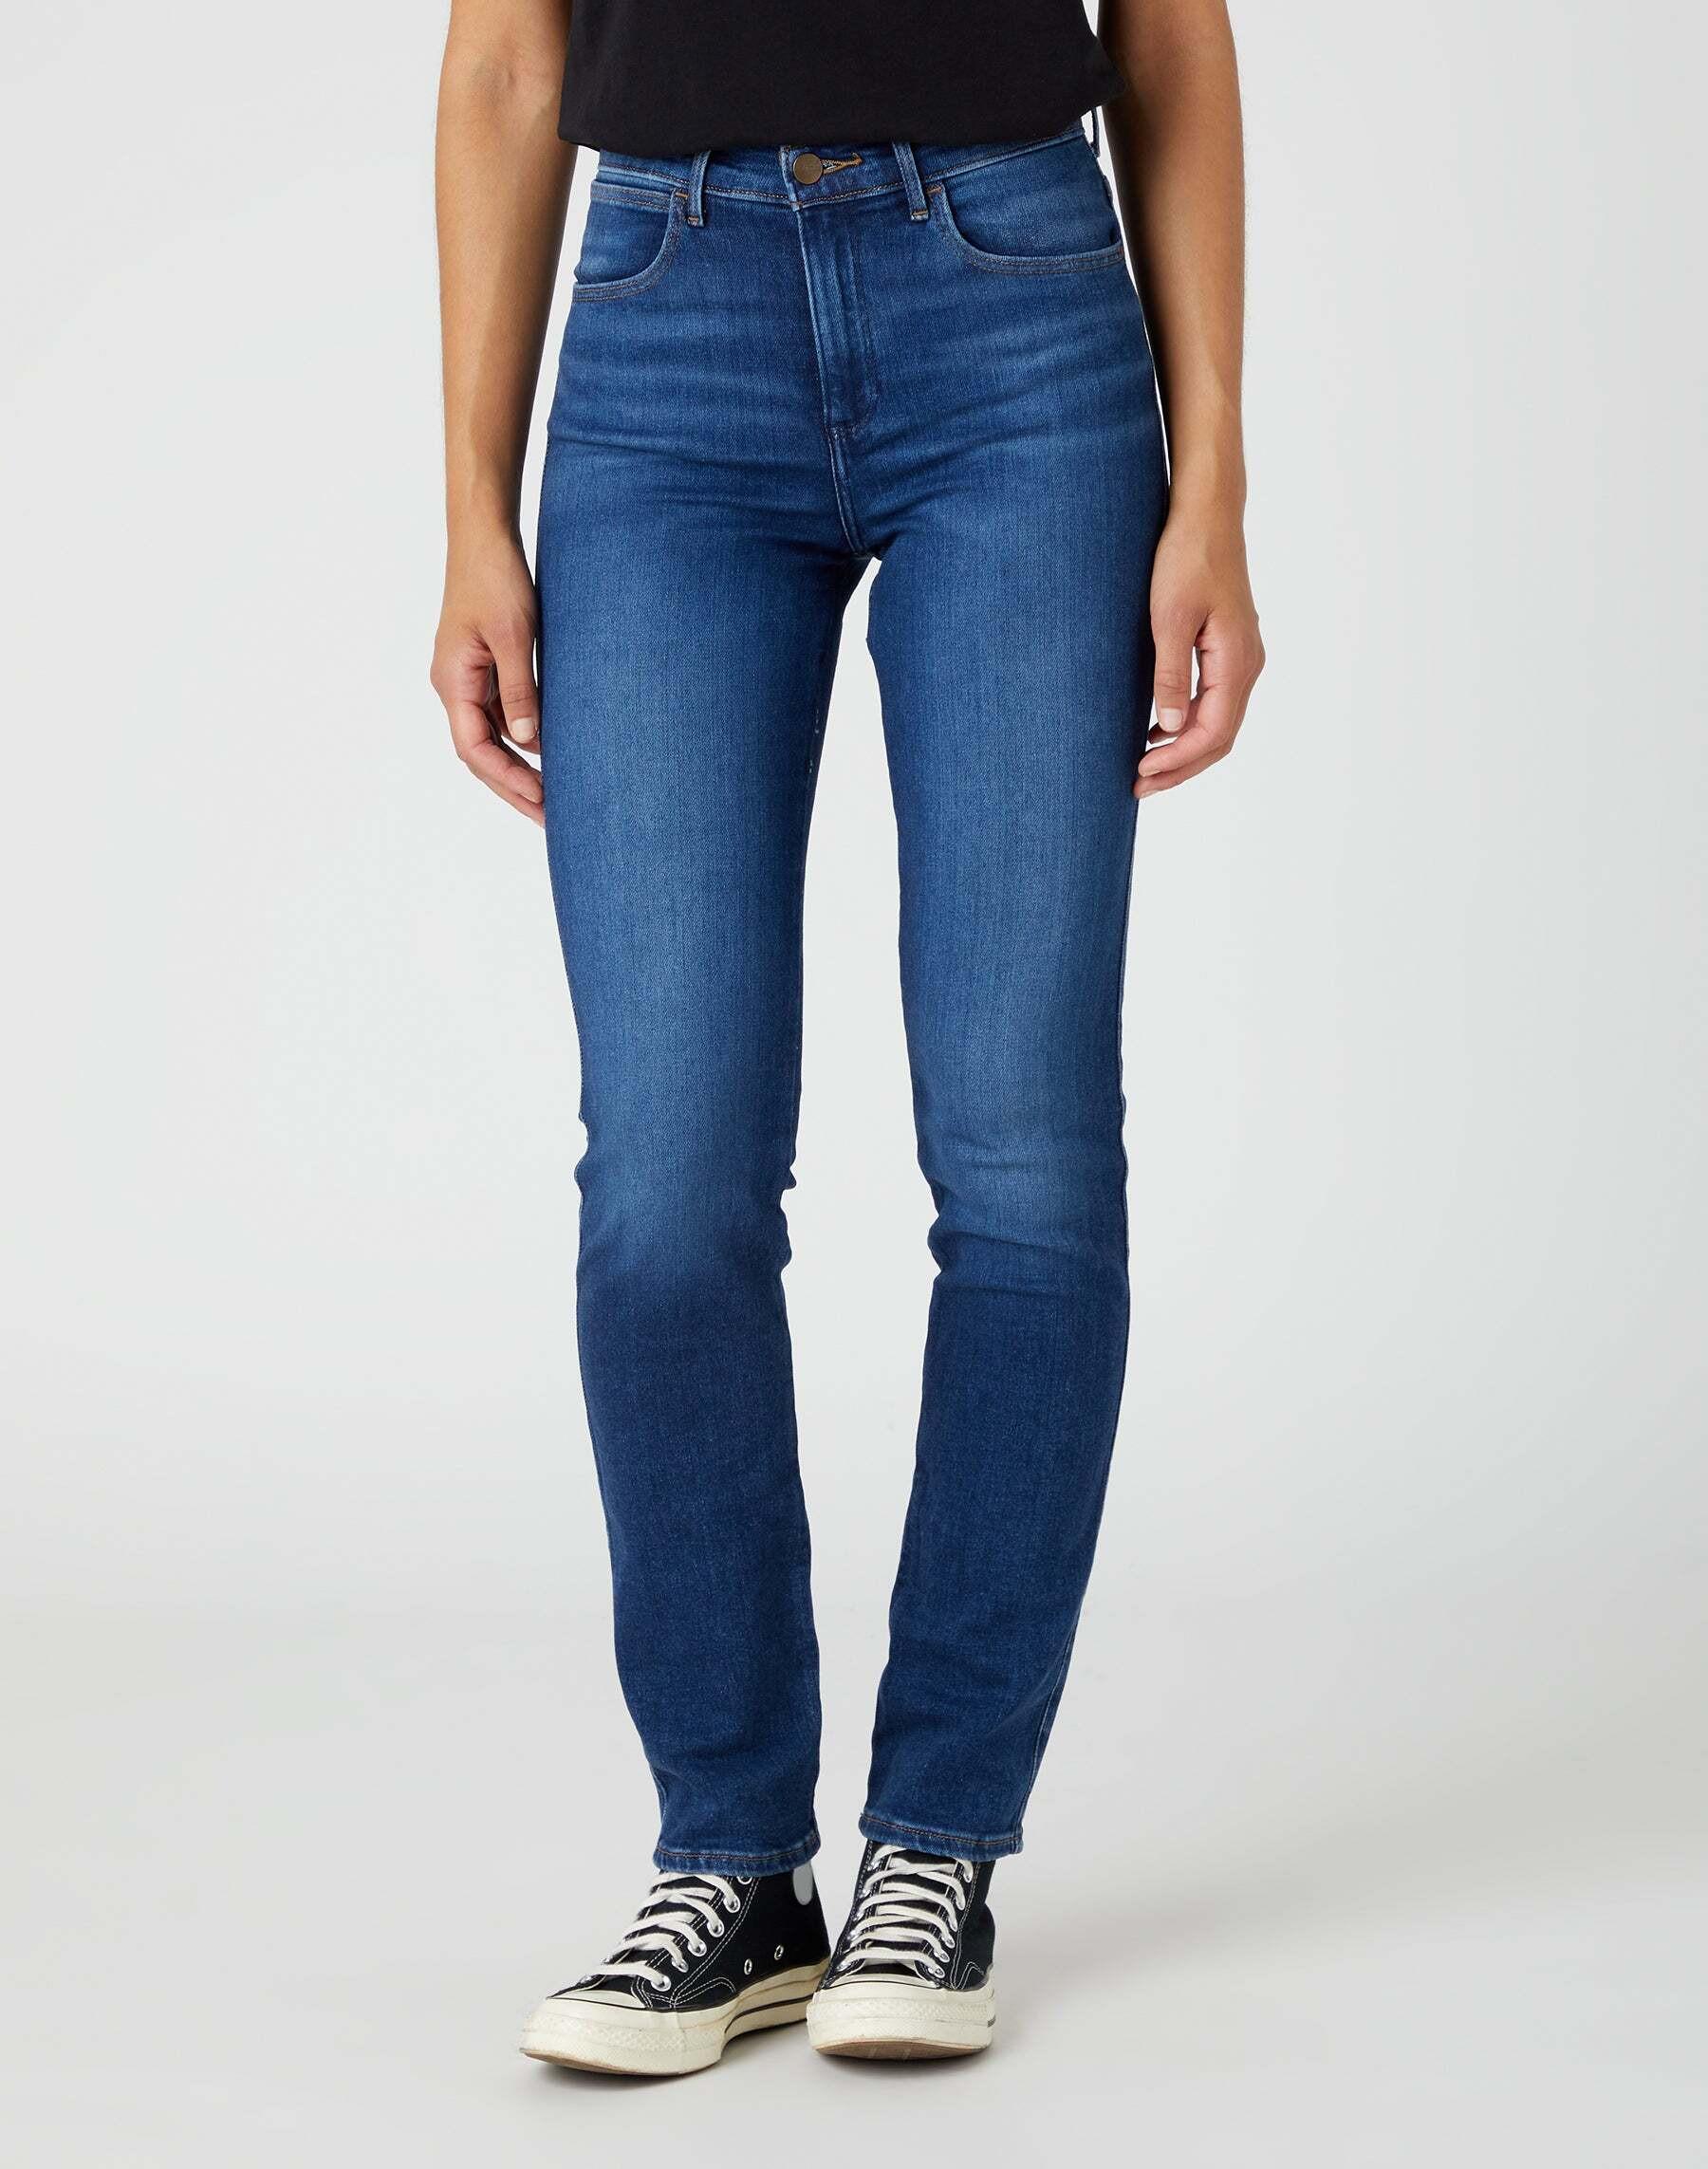 Jeans Slim Damen Blau Denim L32/W26 von Wrangler